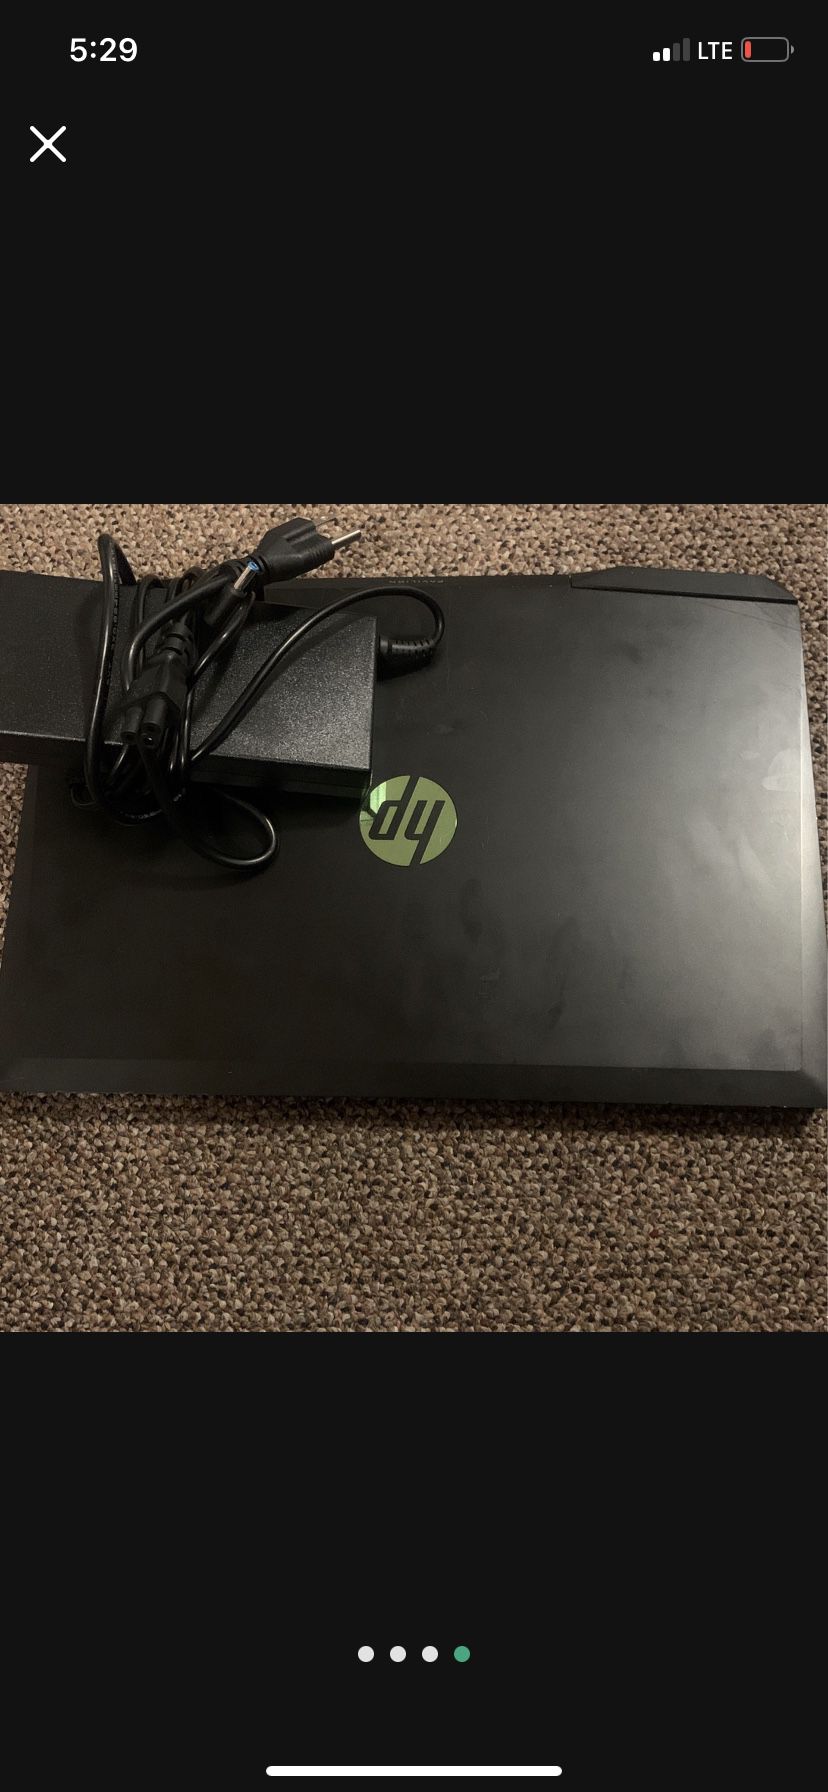 HP, NVIDIA GPU, GAMING 15-inch Laptop